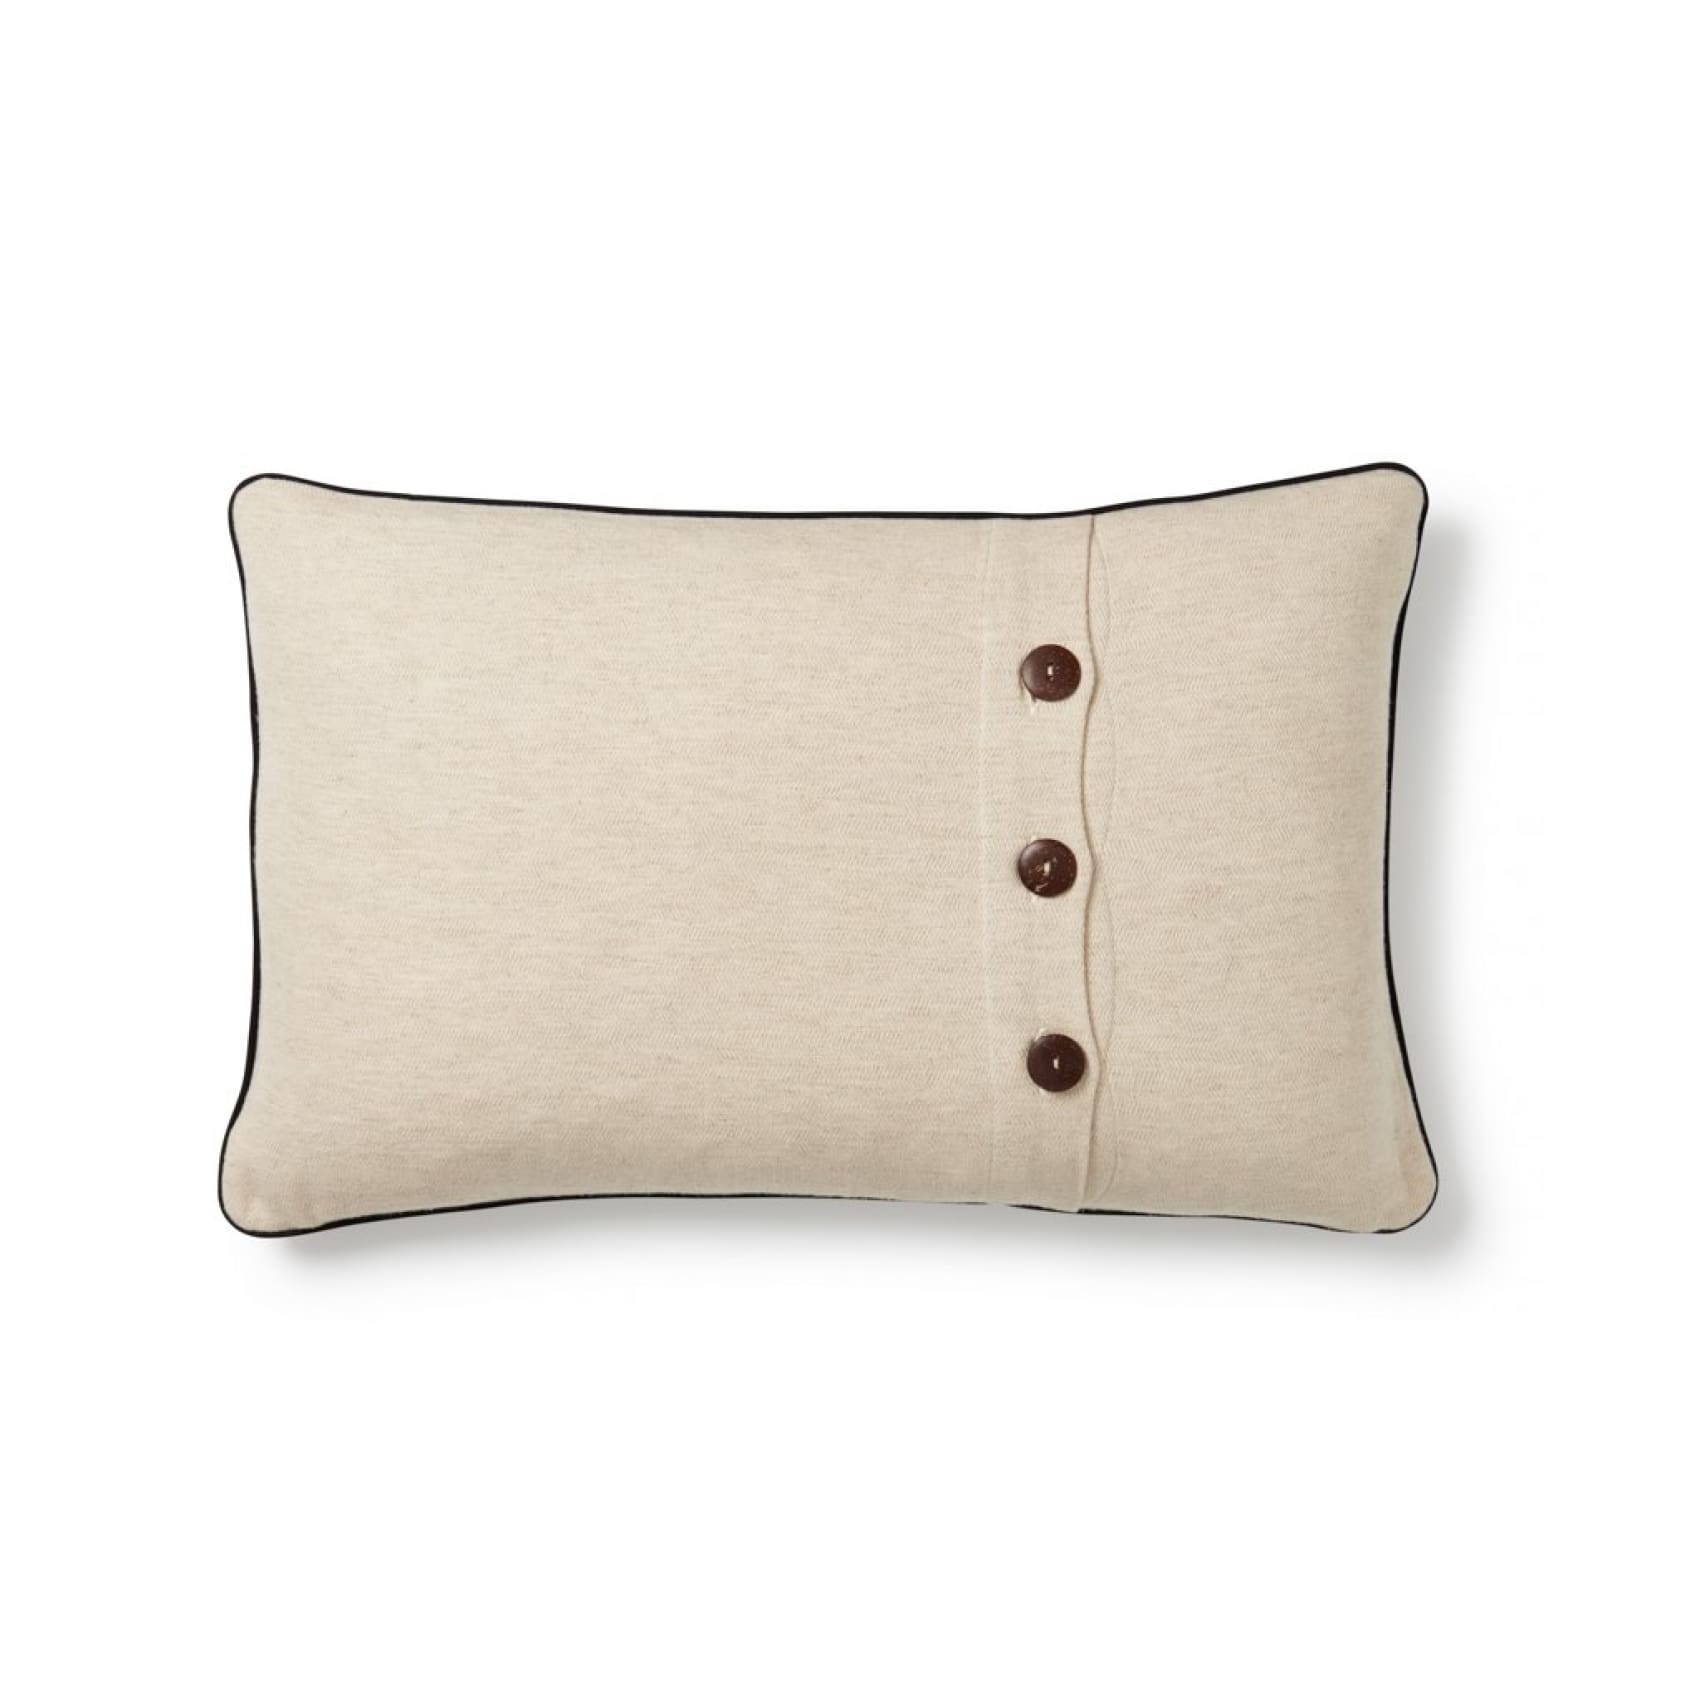 narin-linen-cotton-tencel-cushion-black-ecru-luks-sleeve-beige-bag-272.jpg